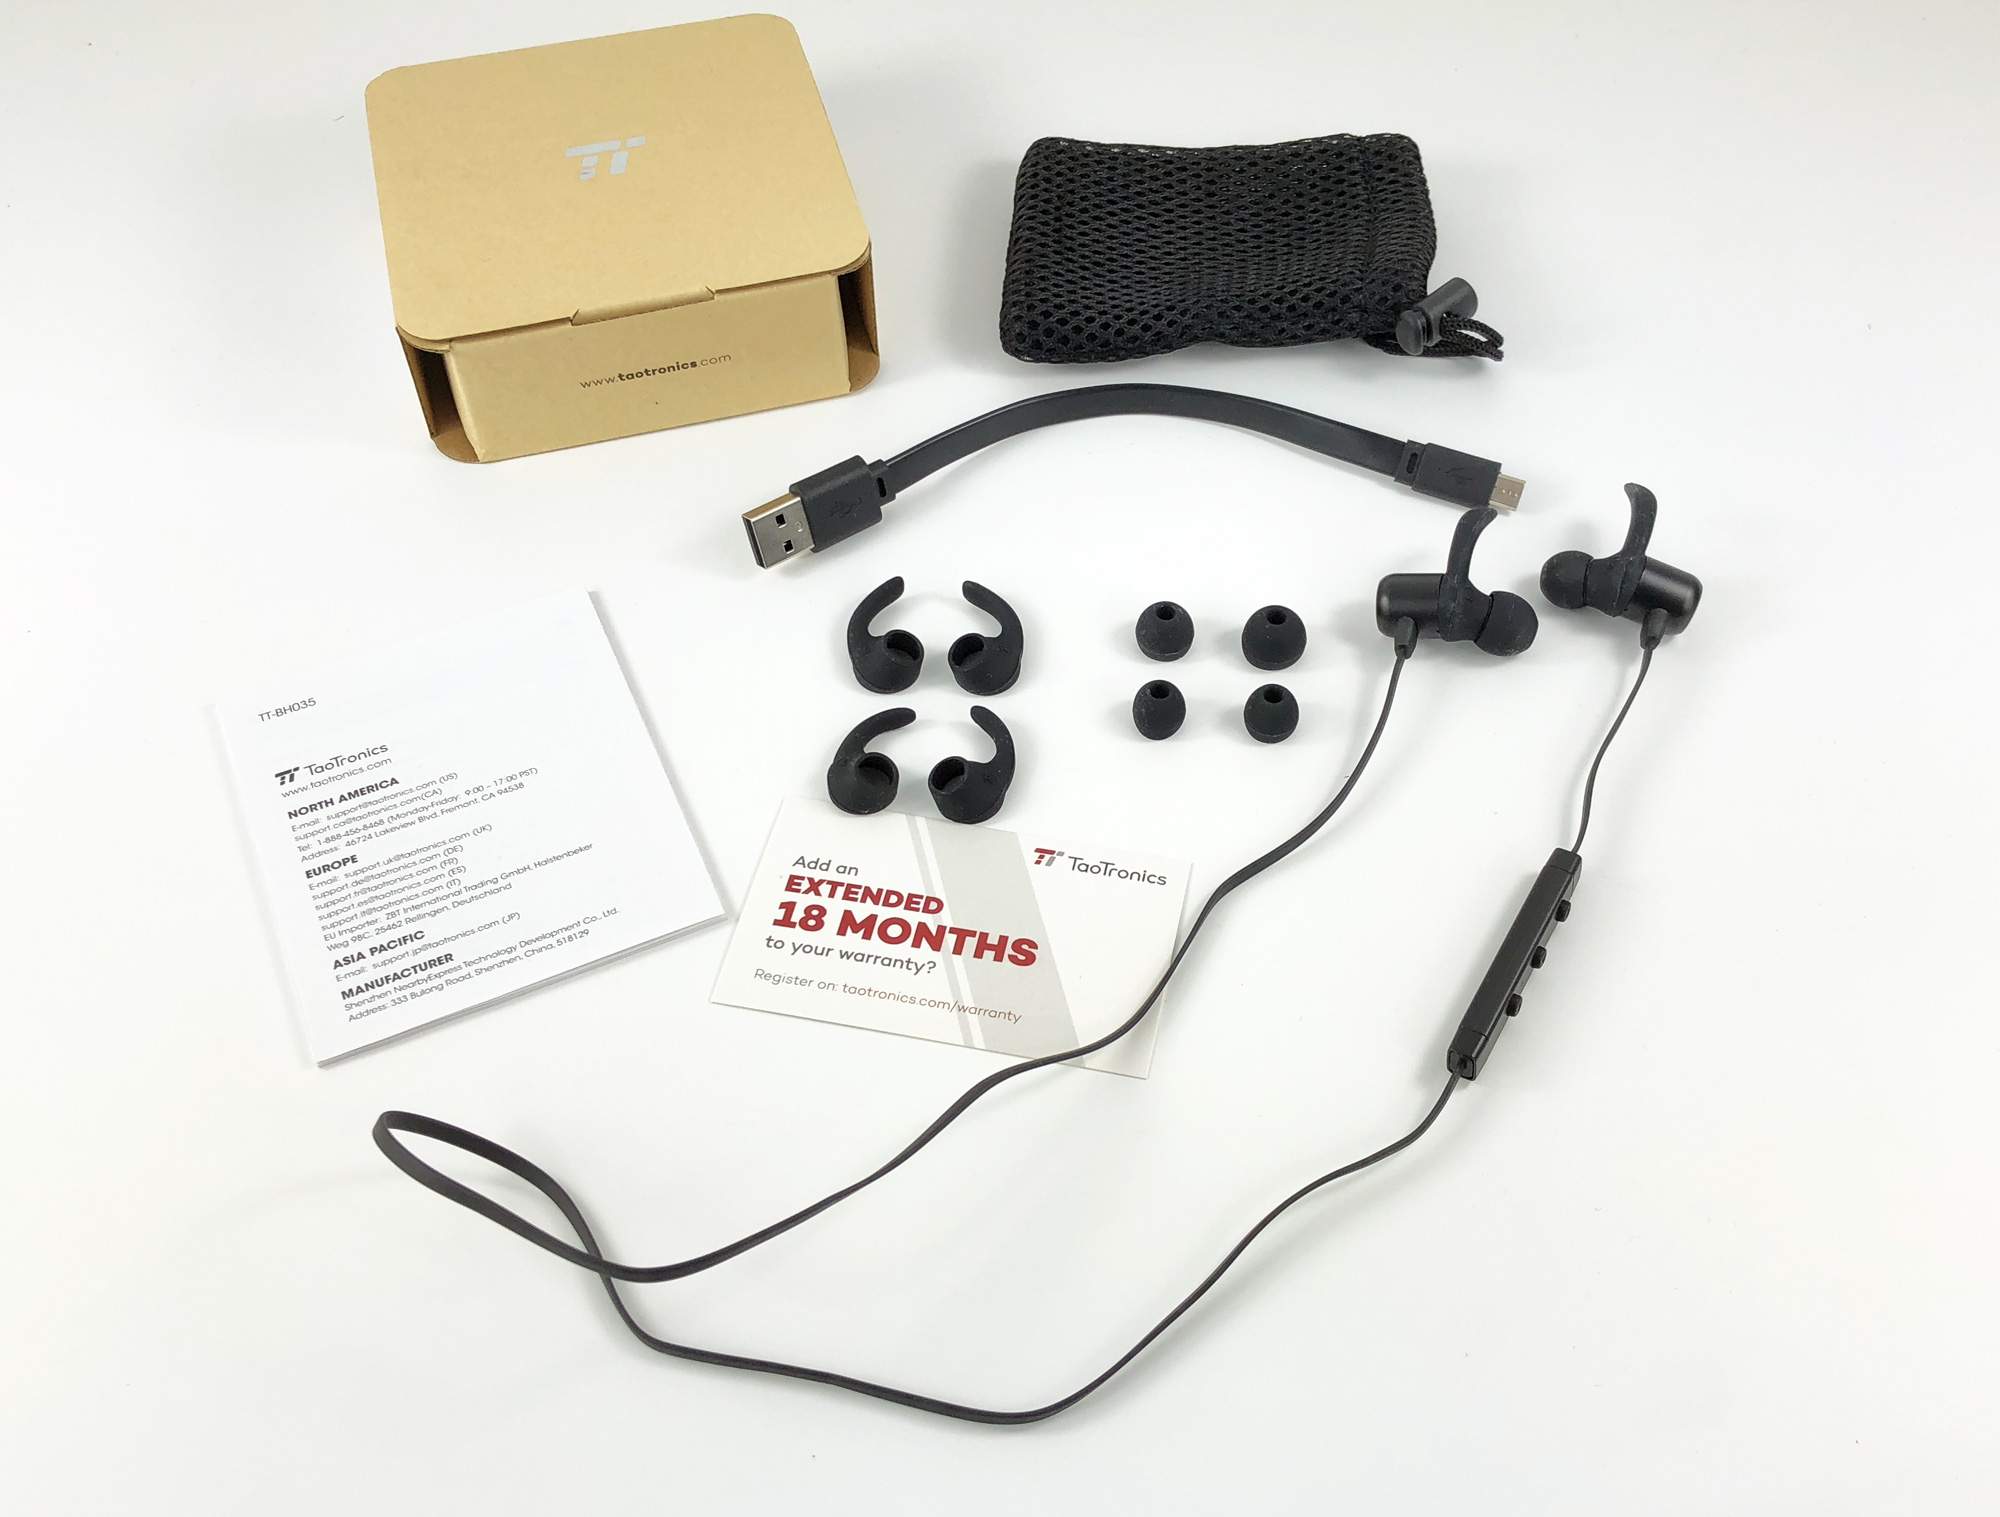 TaoTronics TT-BH035, Bluetooth In-Ear Kopfhörer im Test